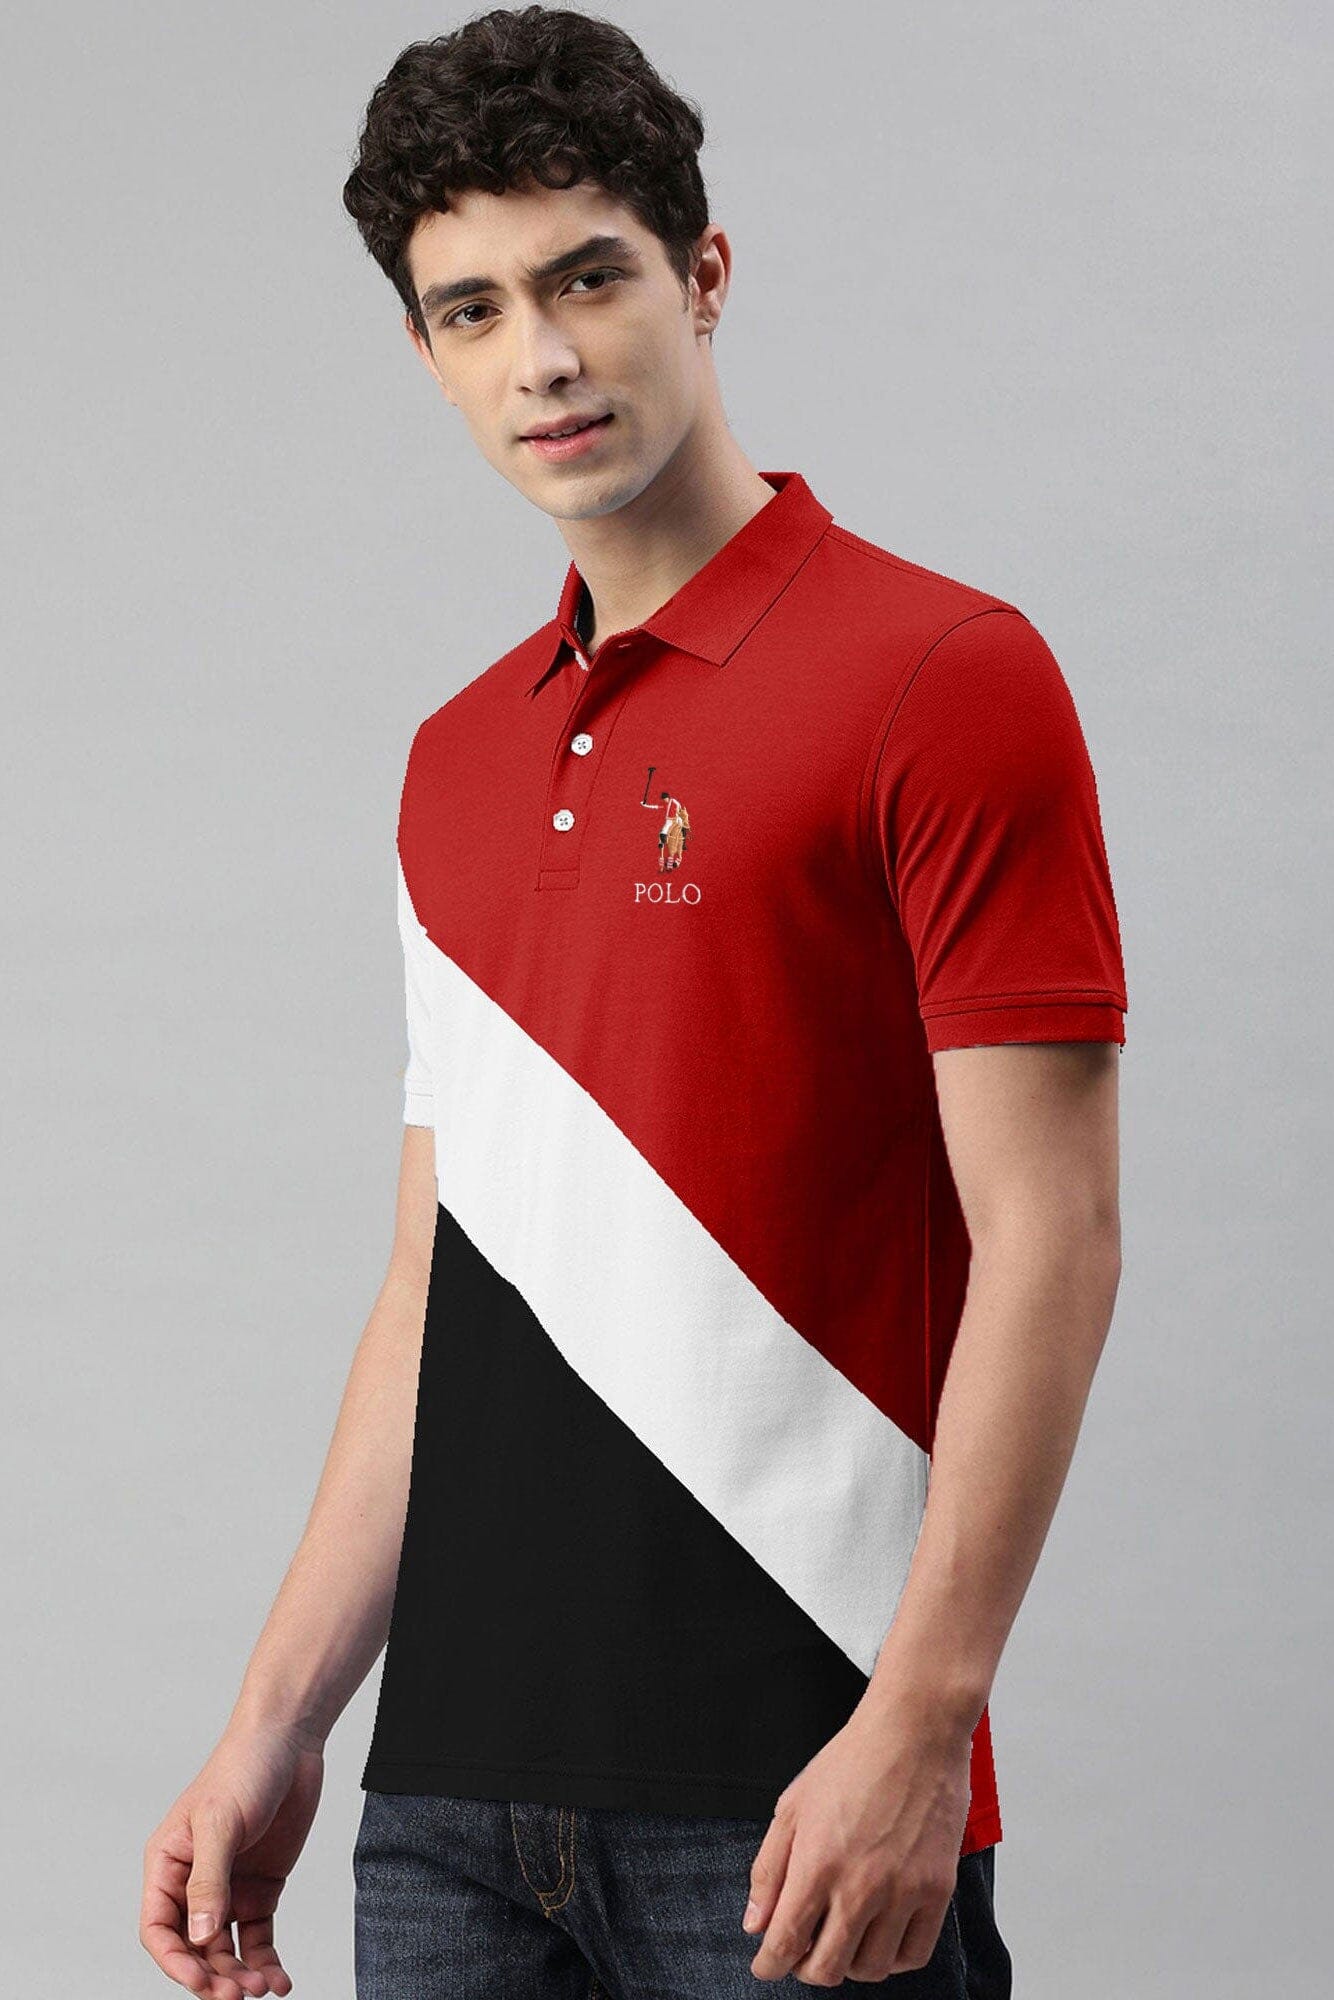 Polo Republica Men's Signature Pony Polo Embroidered Contrast Panel Polo Shirt Men's Polo Shirt Polo Republica Red & Black S 